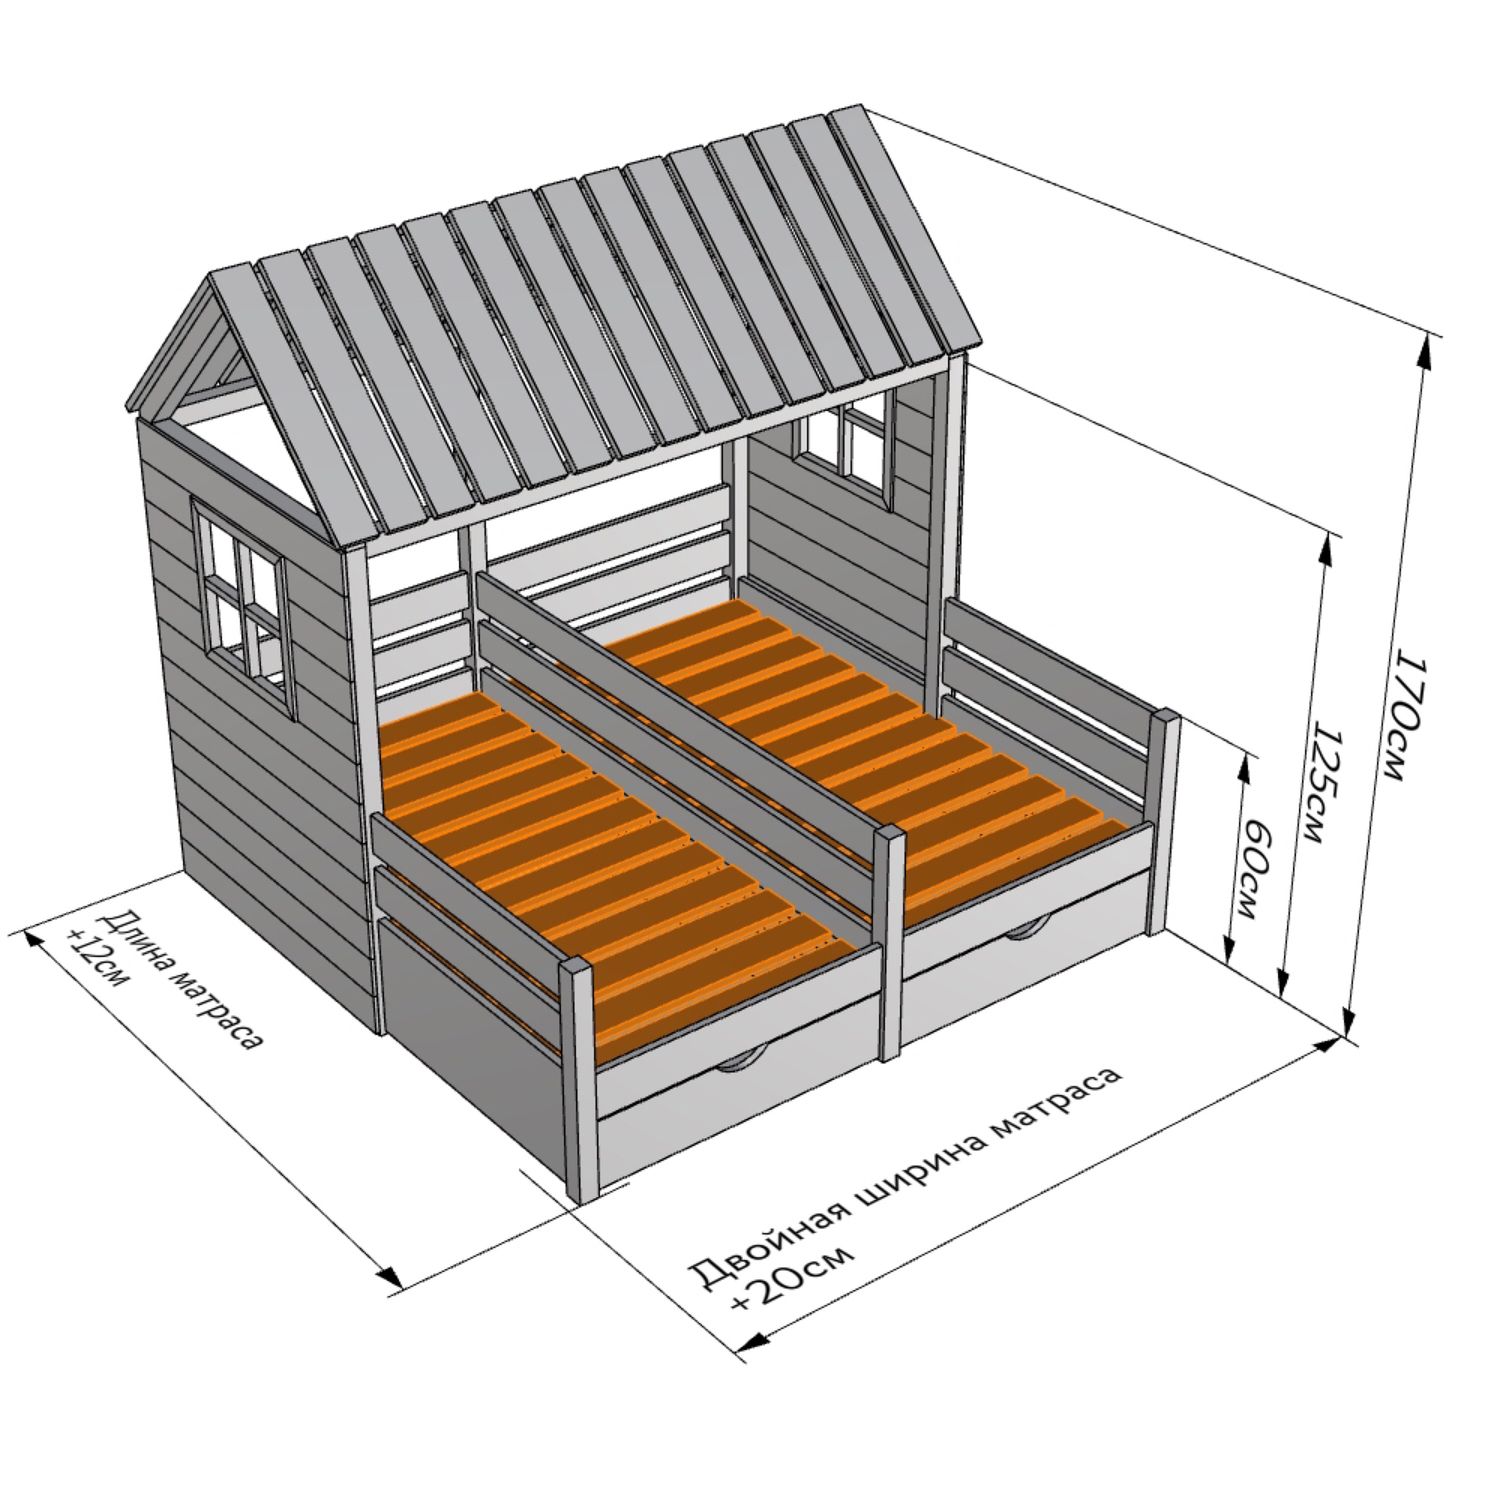 Двухъярусная кровать домик чертеж